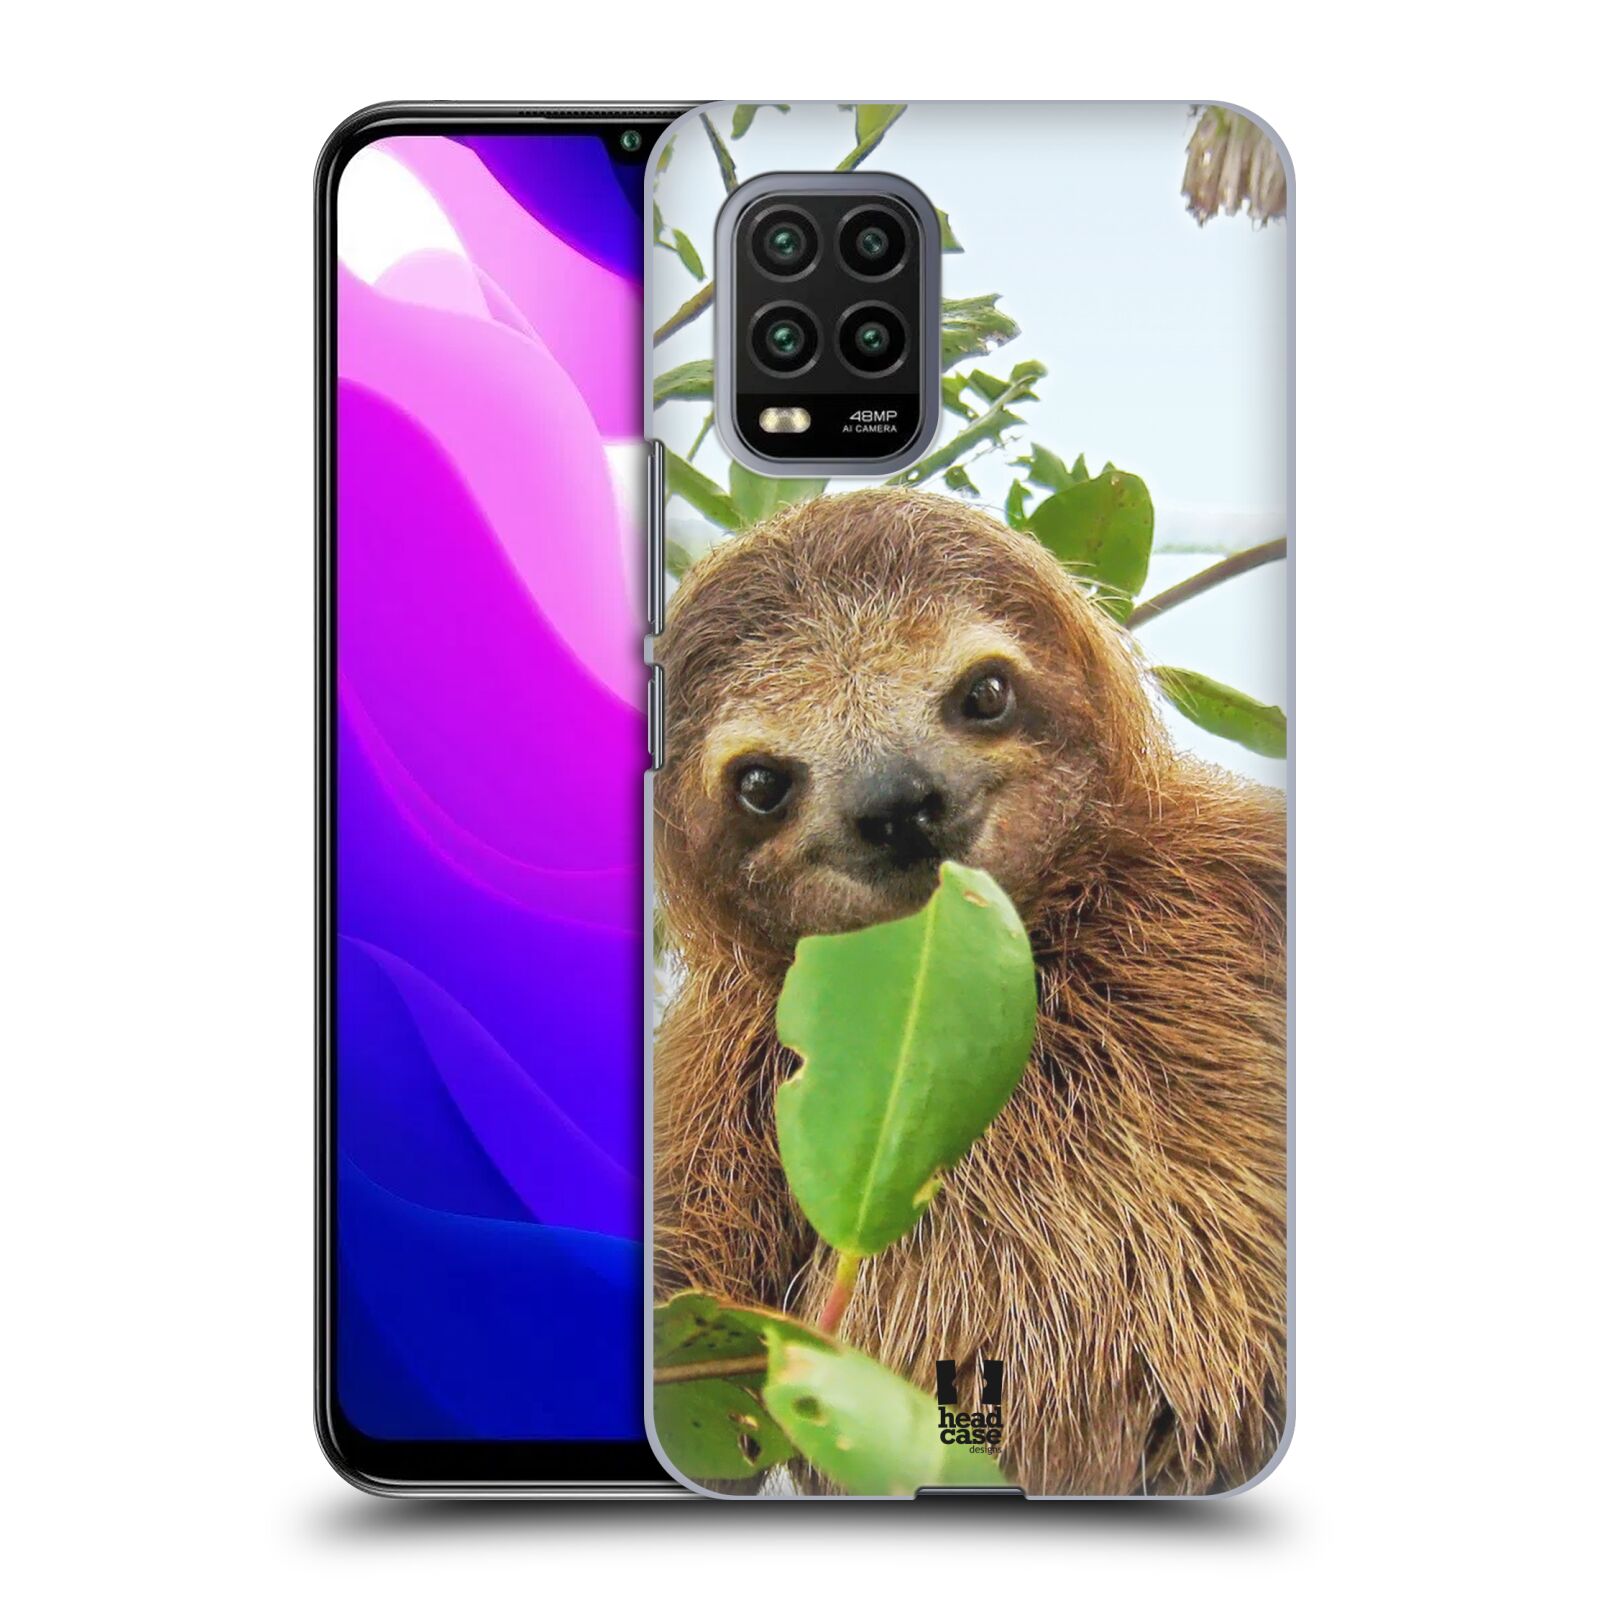 Zadní kryt, obal na mobil Xiaomi Mi 10 LITE vzor slavná zvířata foto lenochod